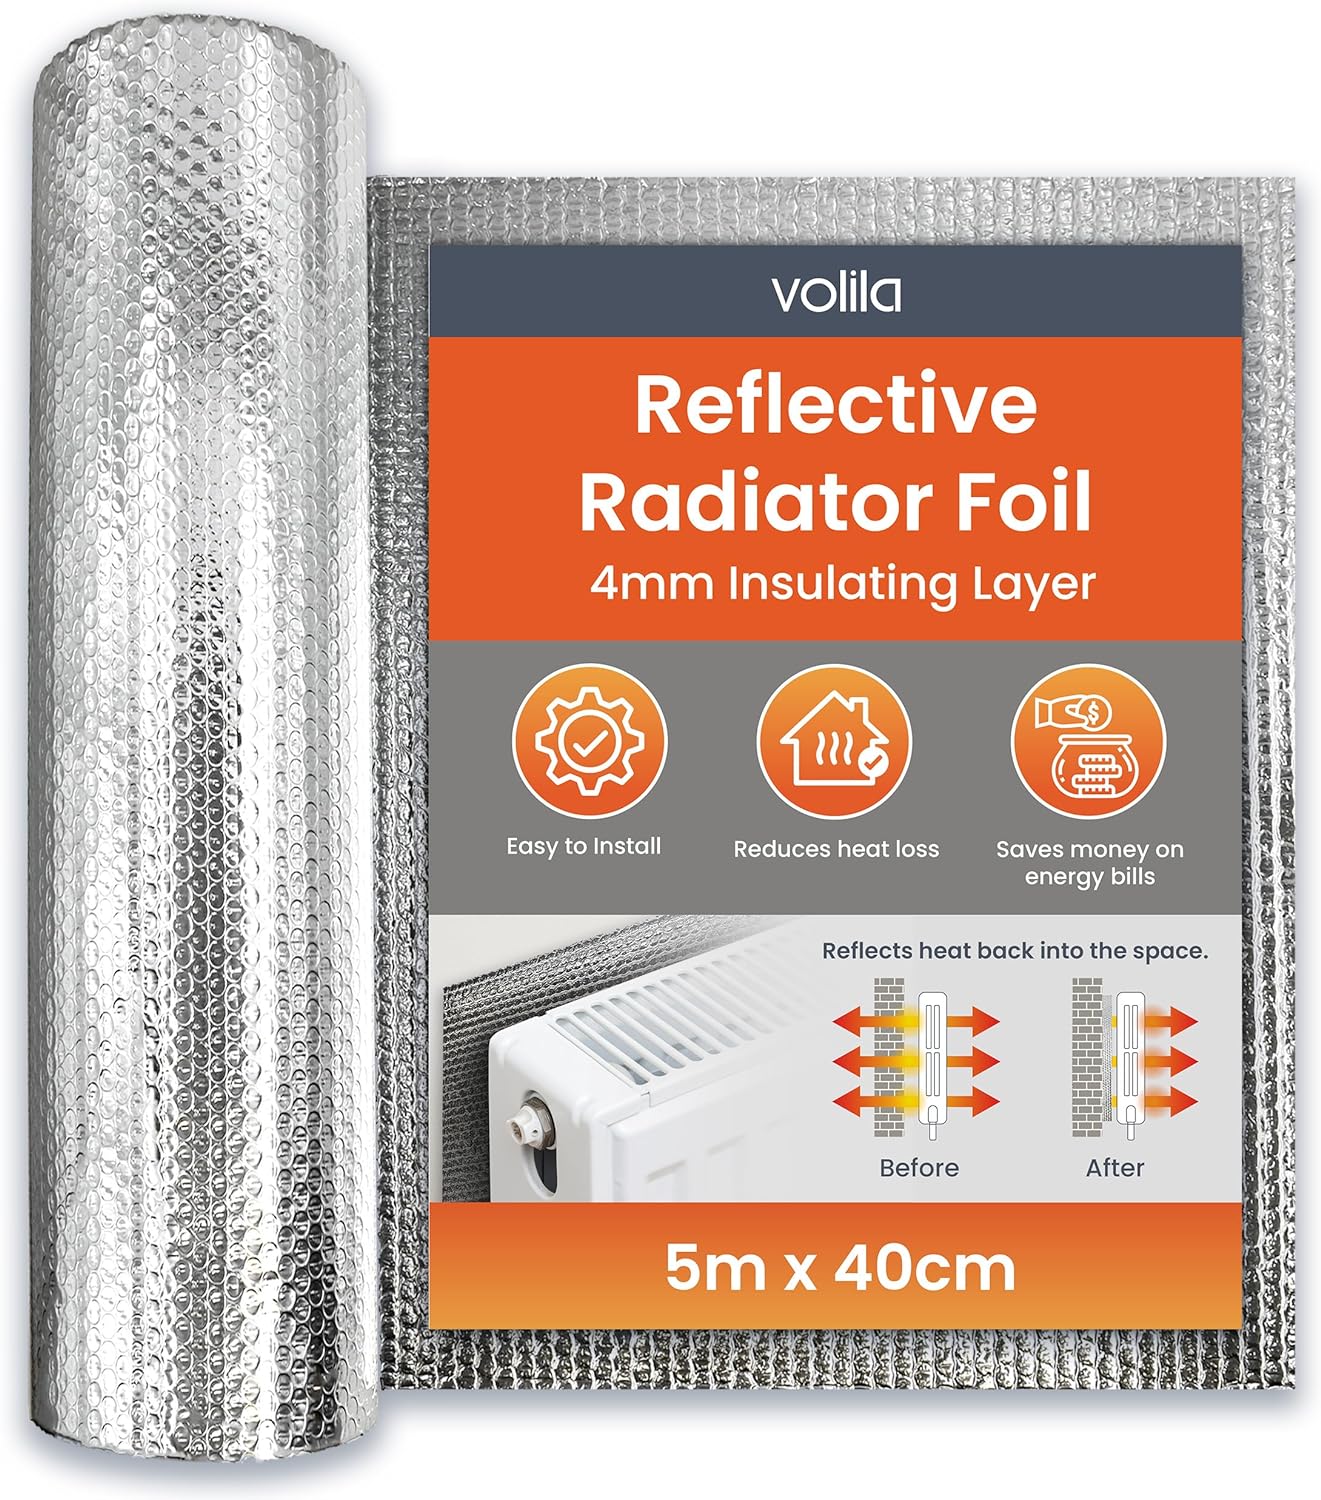 Reflective Radiator Foil for Energy Savings